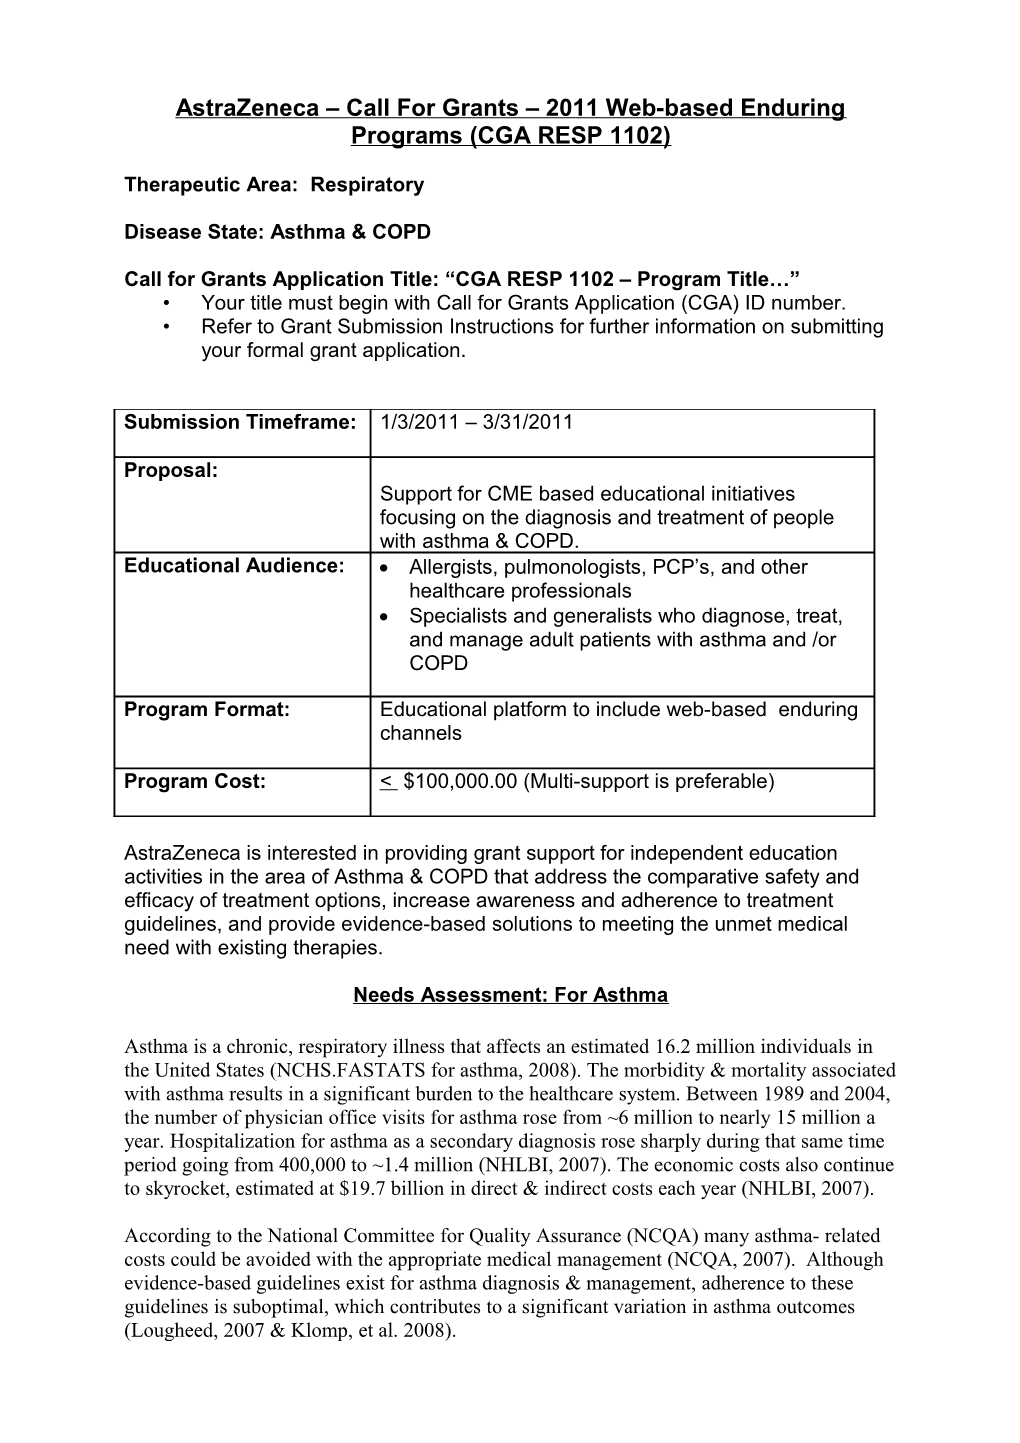 Astrazeneca Call for Grants 2011 Web-Based Enduringprograms(CGA RESP 1102)